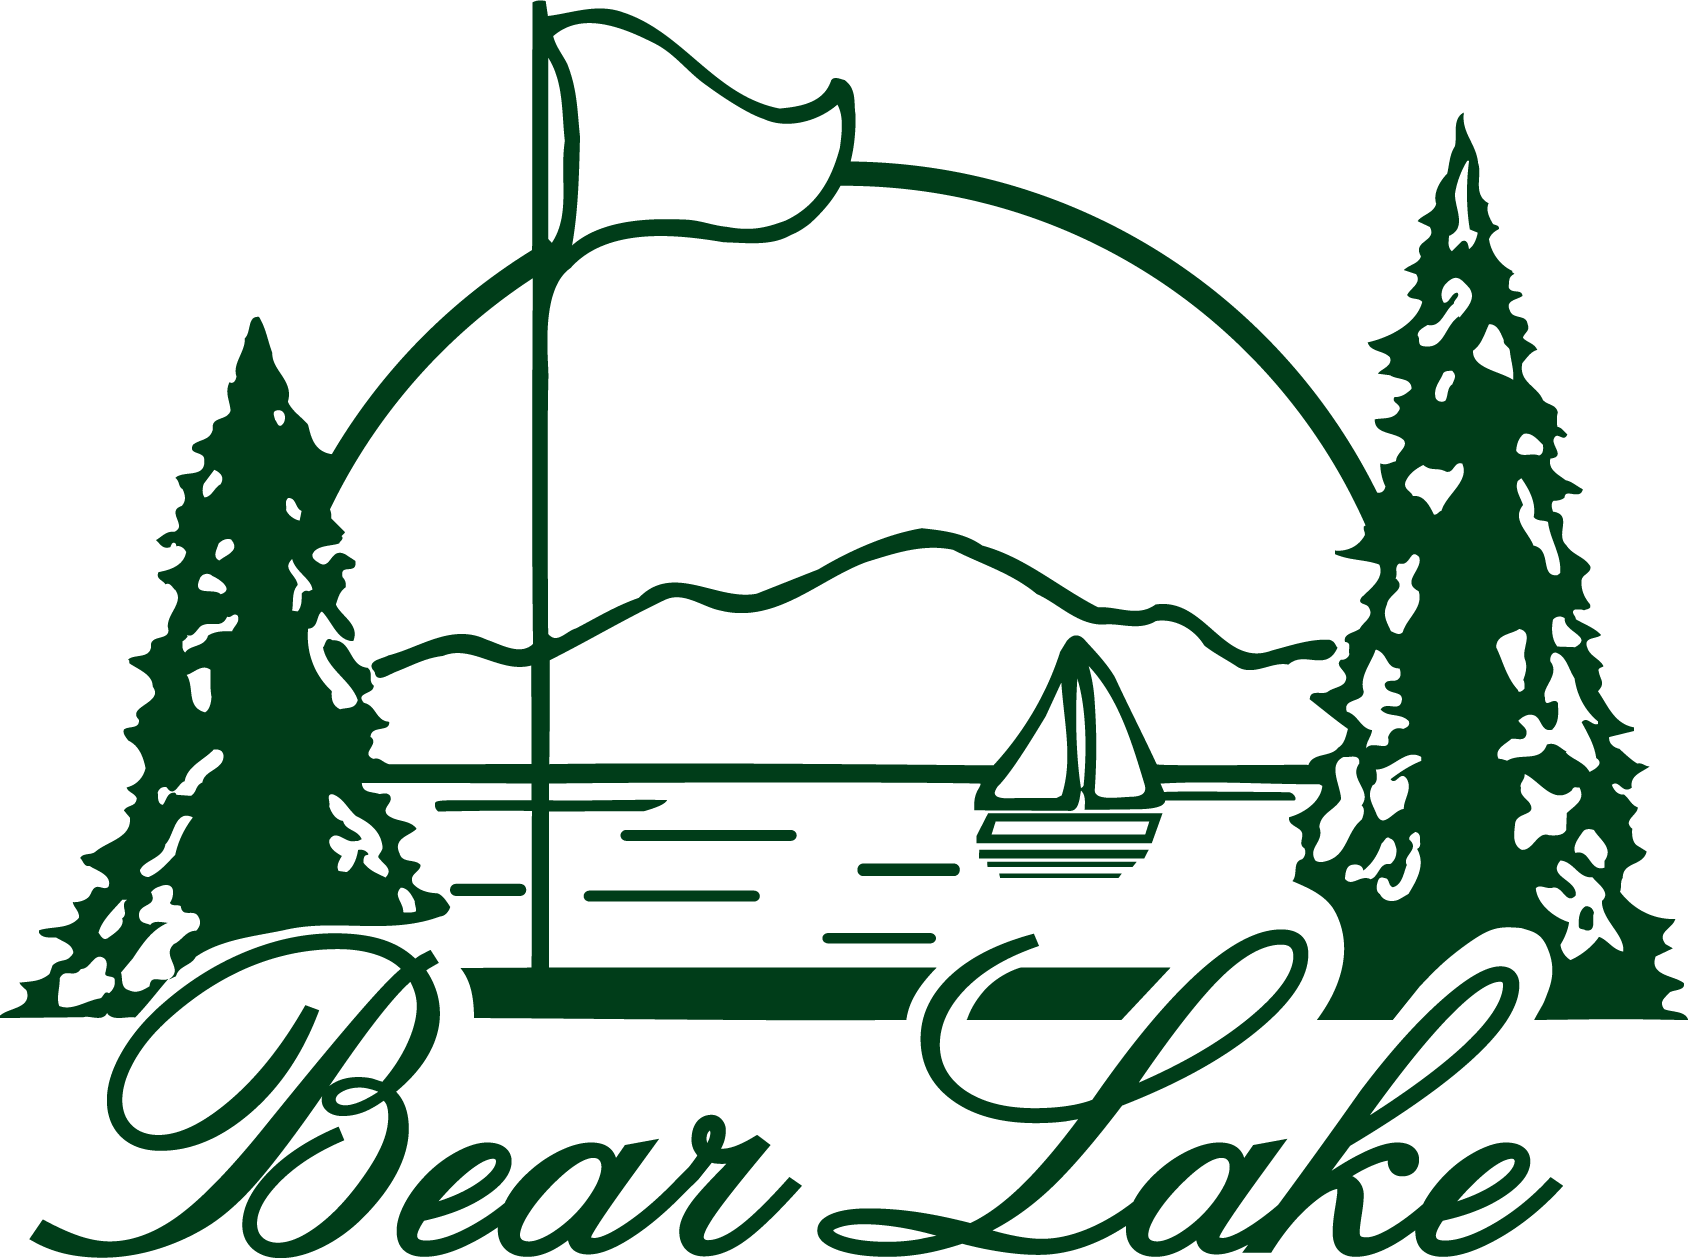 Bear Lake Golf Course